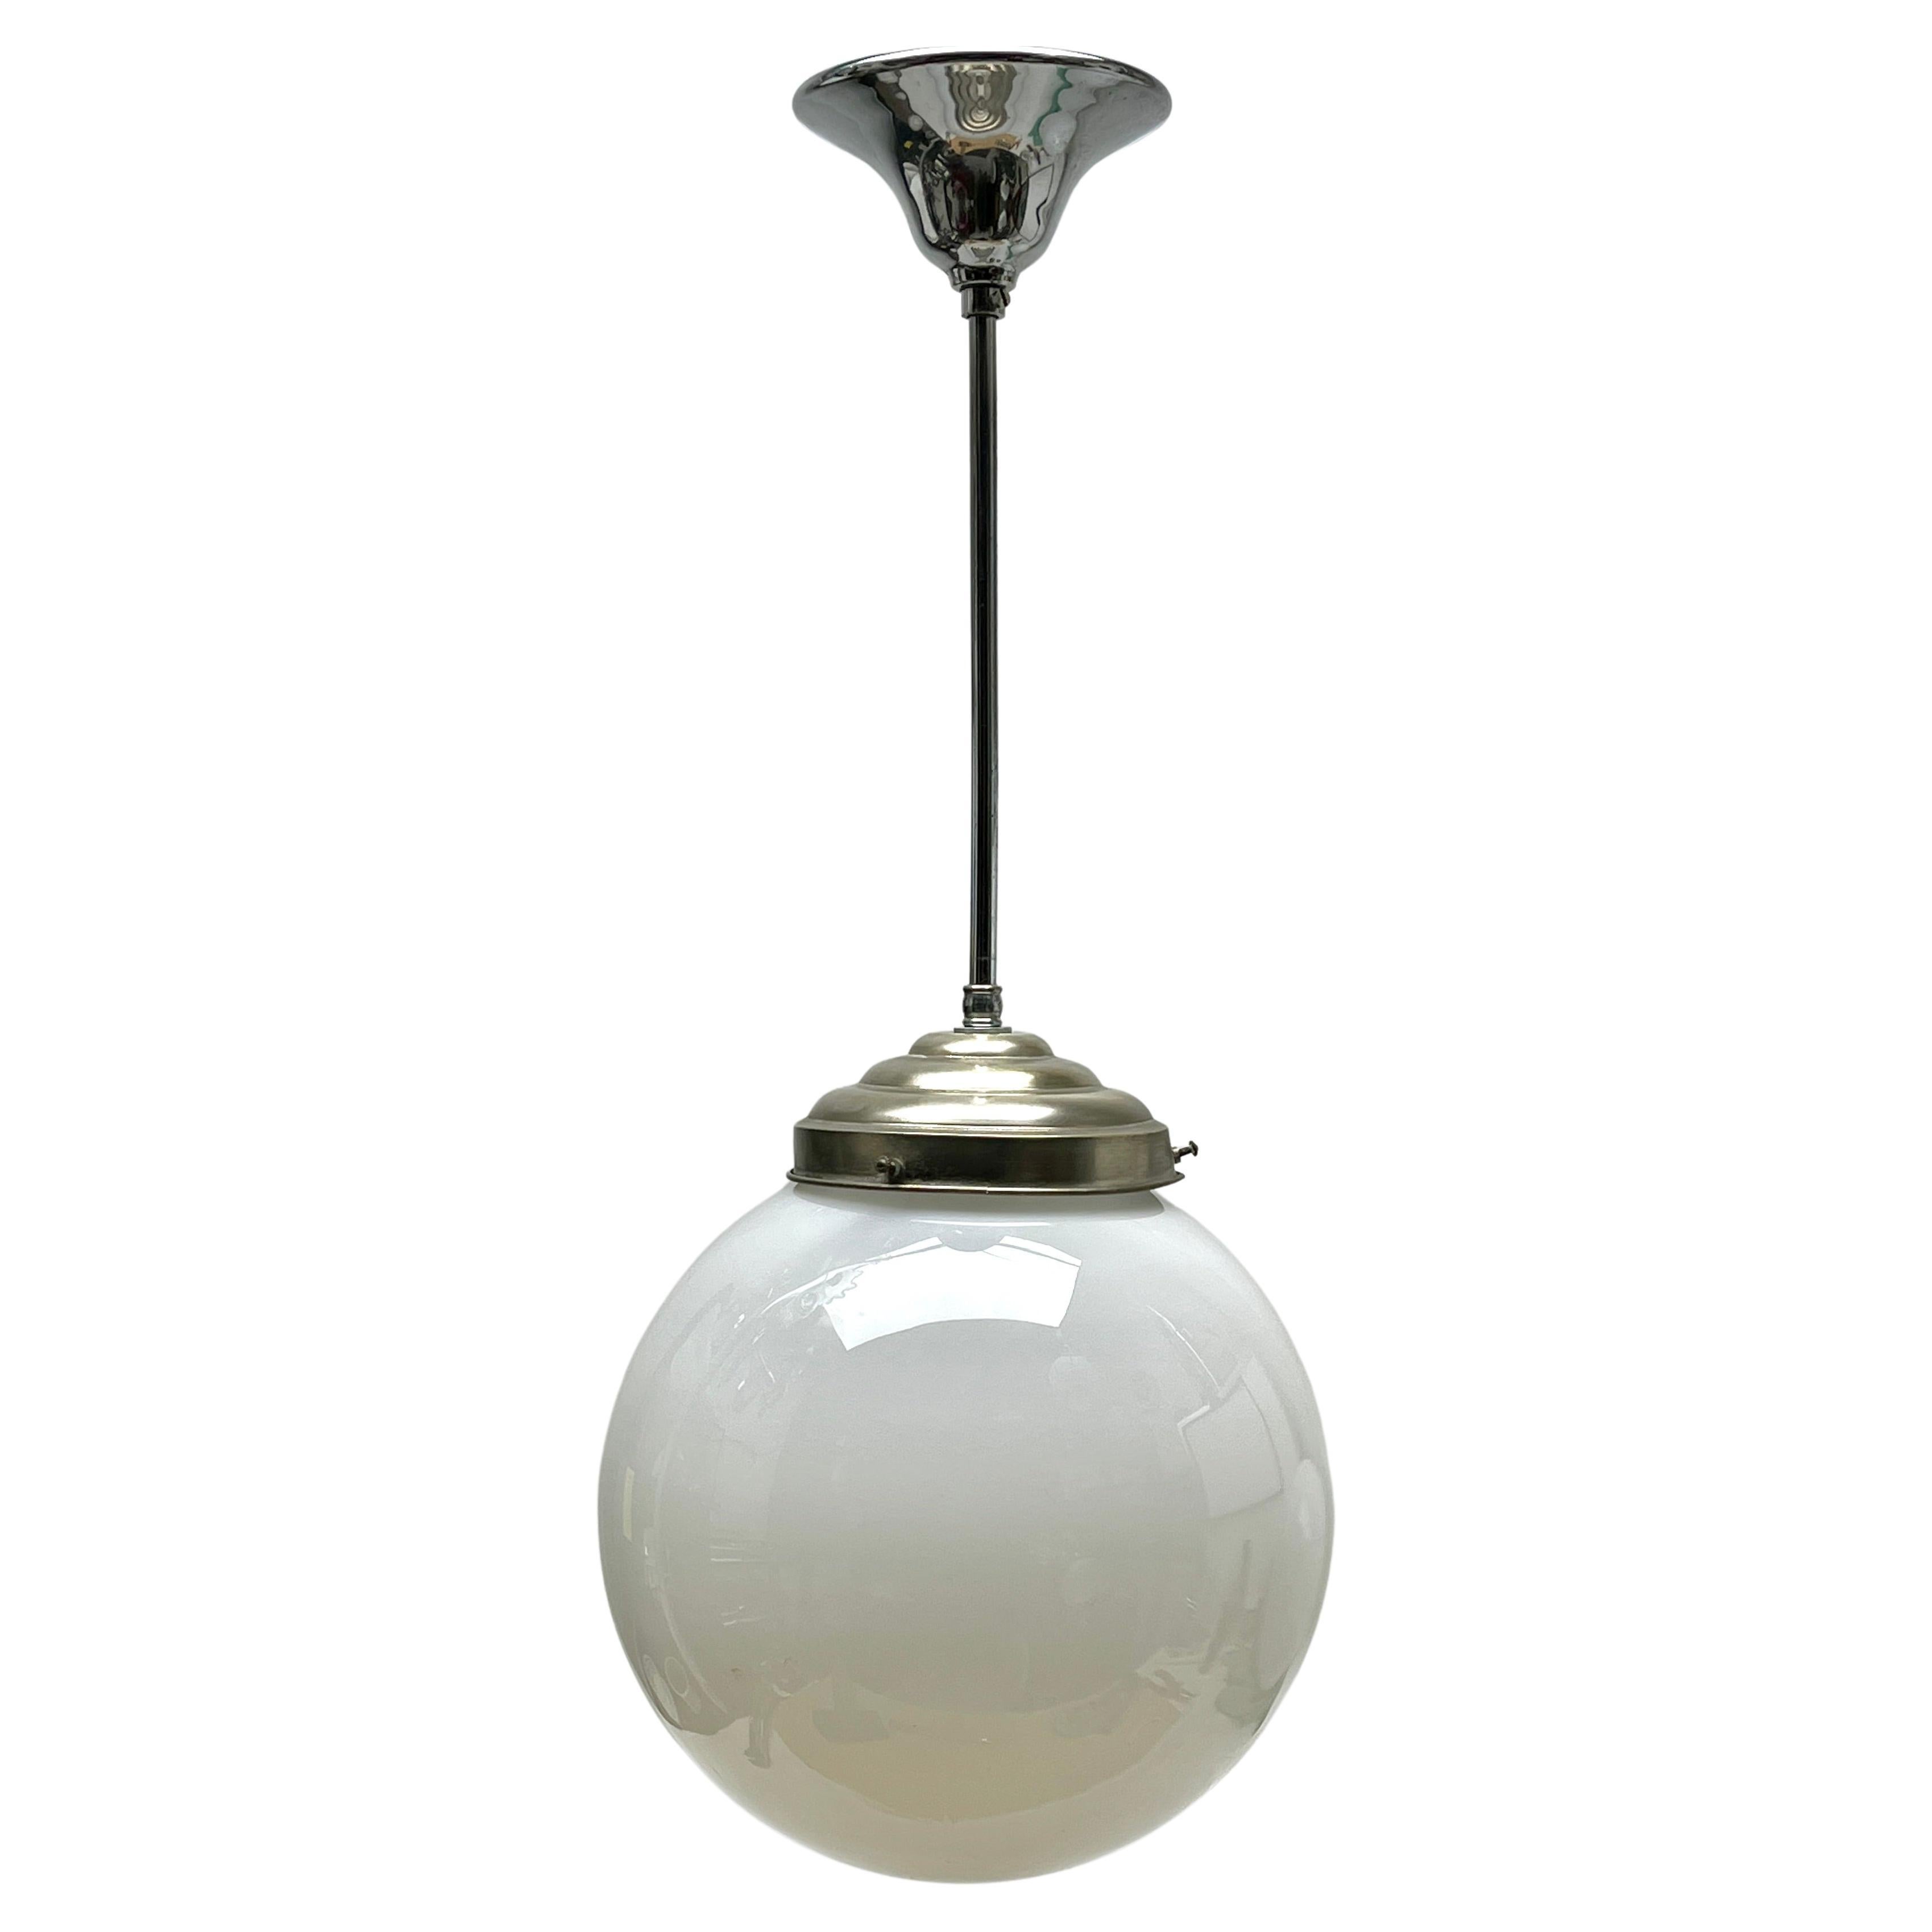 Phillips Pendel Stem Lampe mit kugelförmigem Opalschirm, 1930er Jahre, Niederlande